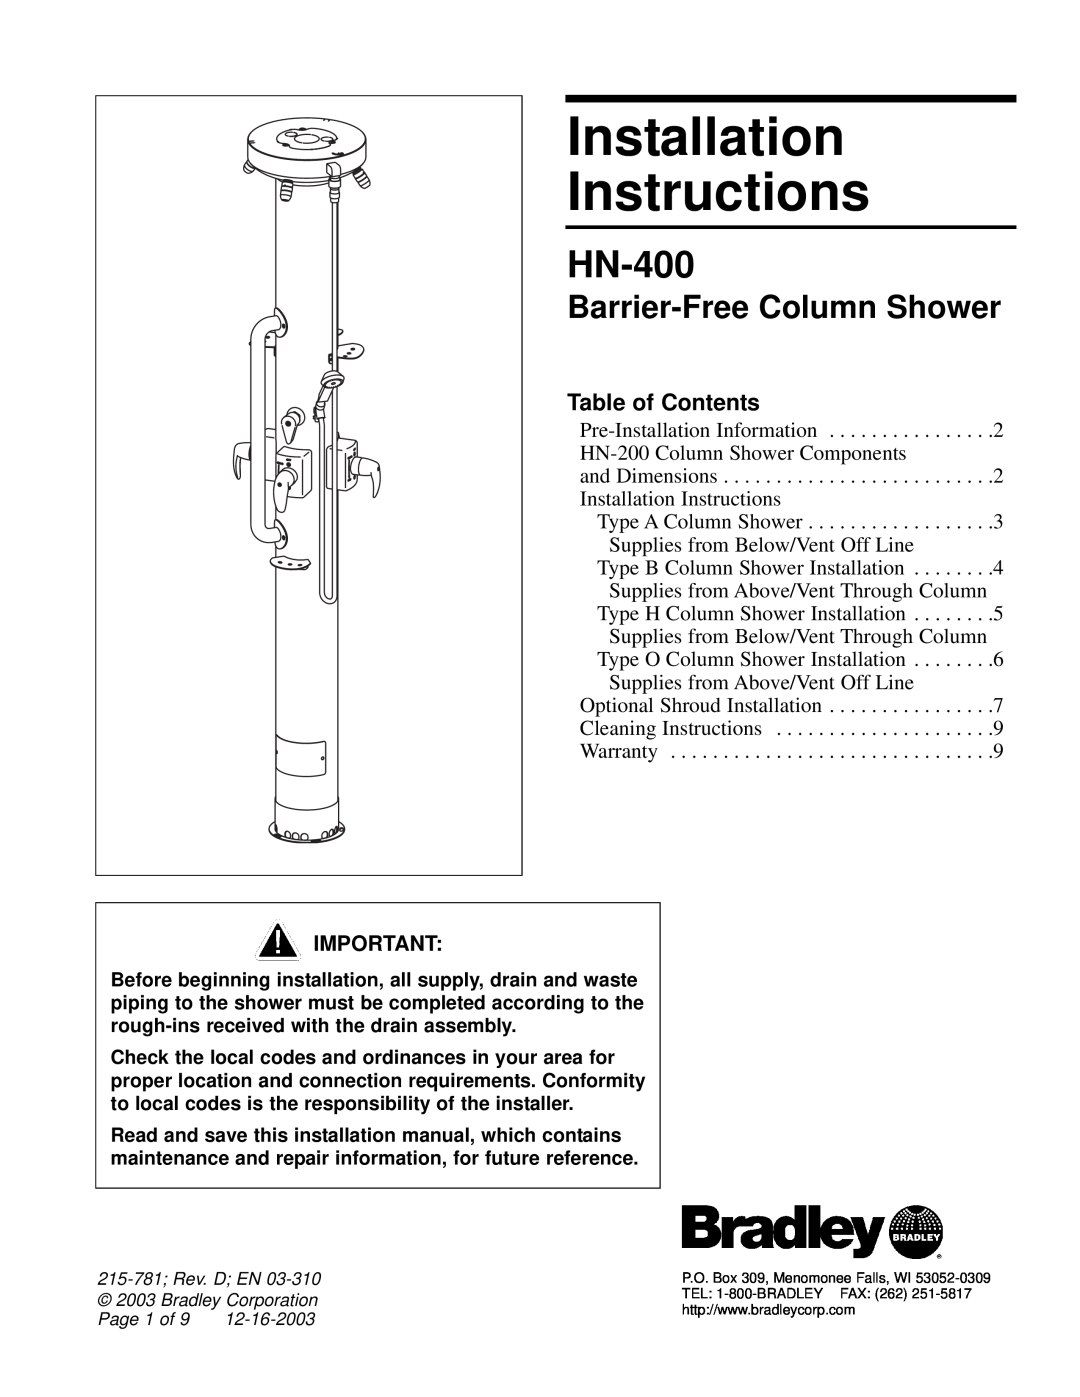 Bradley Smoker HN-400 installation instructions Table of Contents, Installation, Instructions, Barrier-FreeColumn Shower 